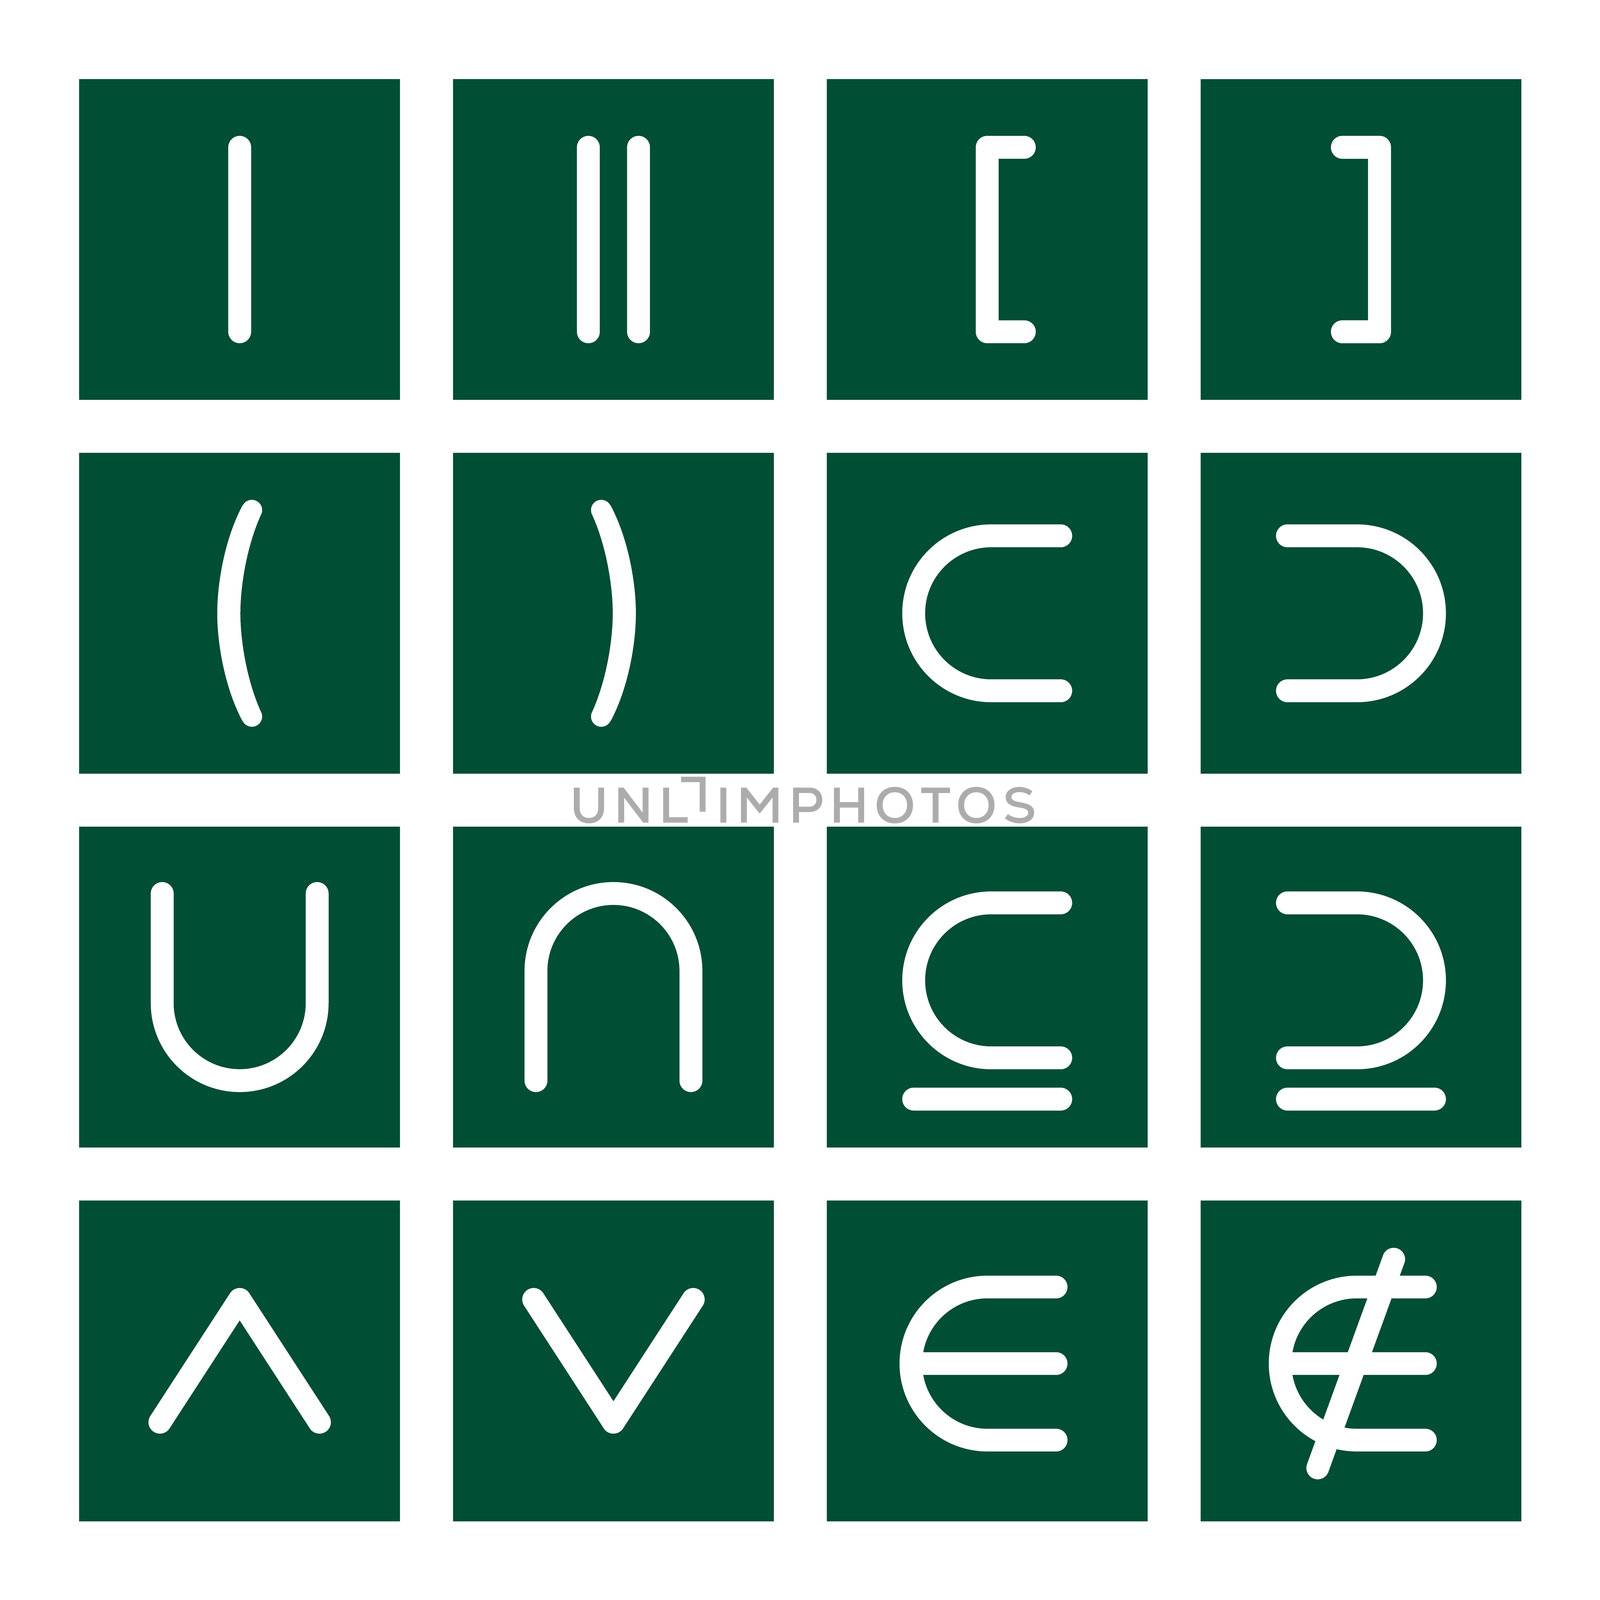 16 icon set of mathematical symbols (function operators, group operators)